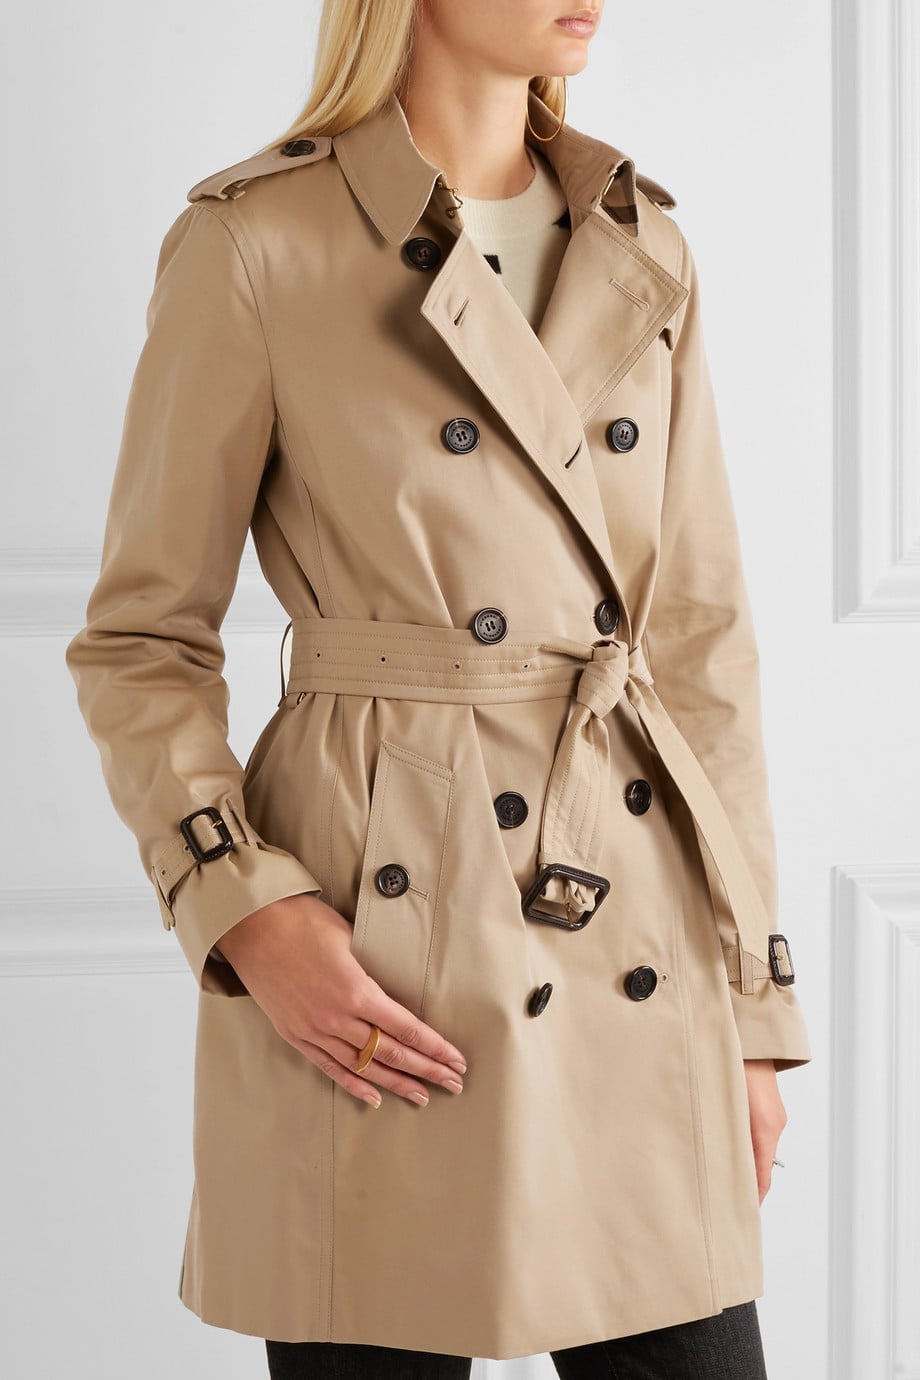 kensington trench coat